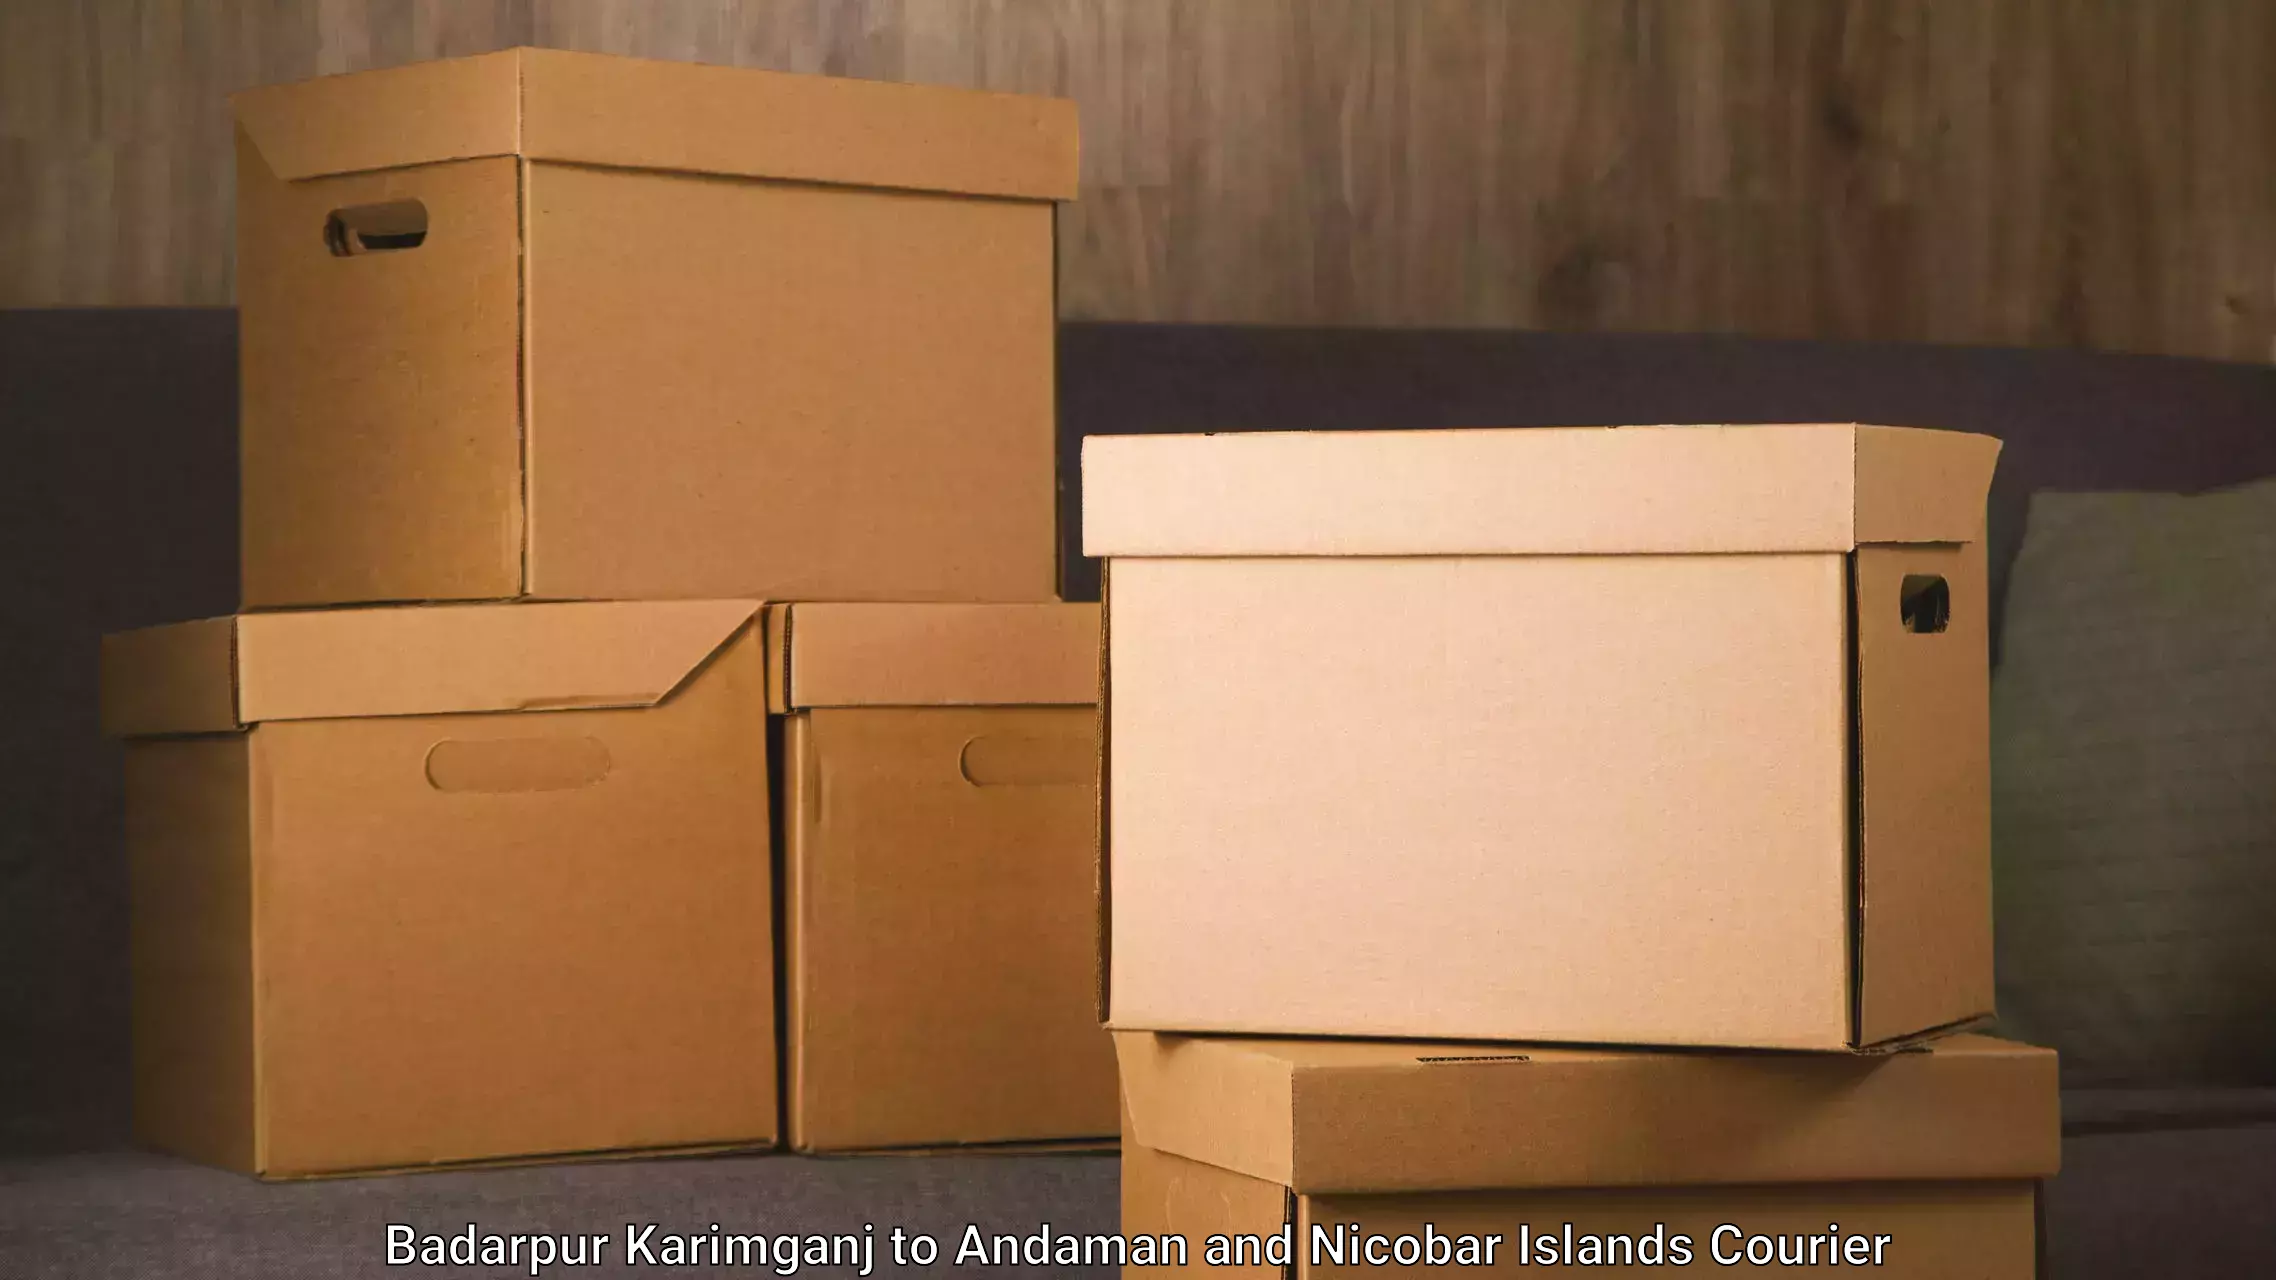 Package delivery network Badarpur Karimganj to Andaman and Nicobar Islands